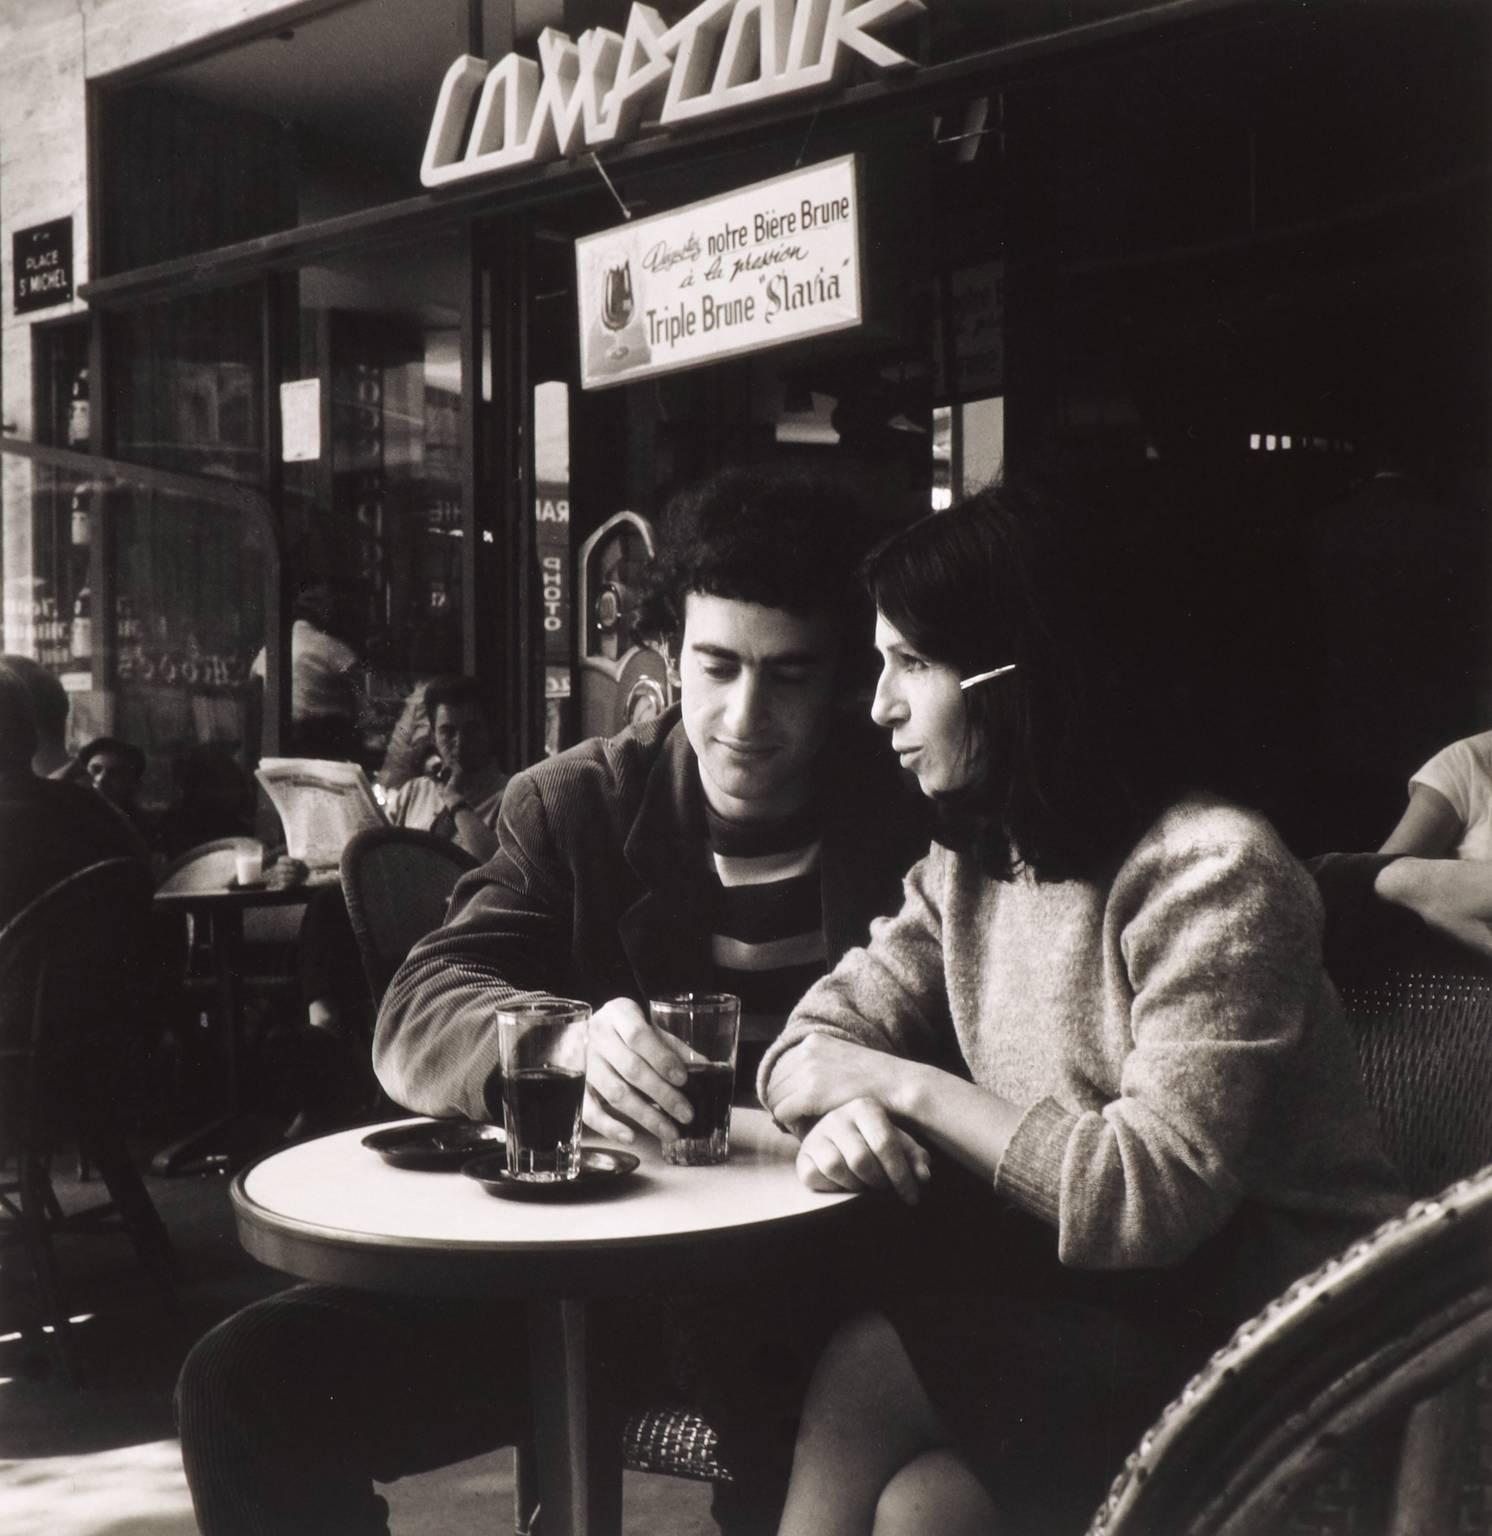 On St. Germain, Paris, 1961 - Photograph by Imogen Cunningham